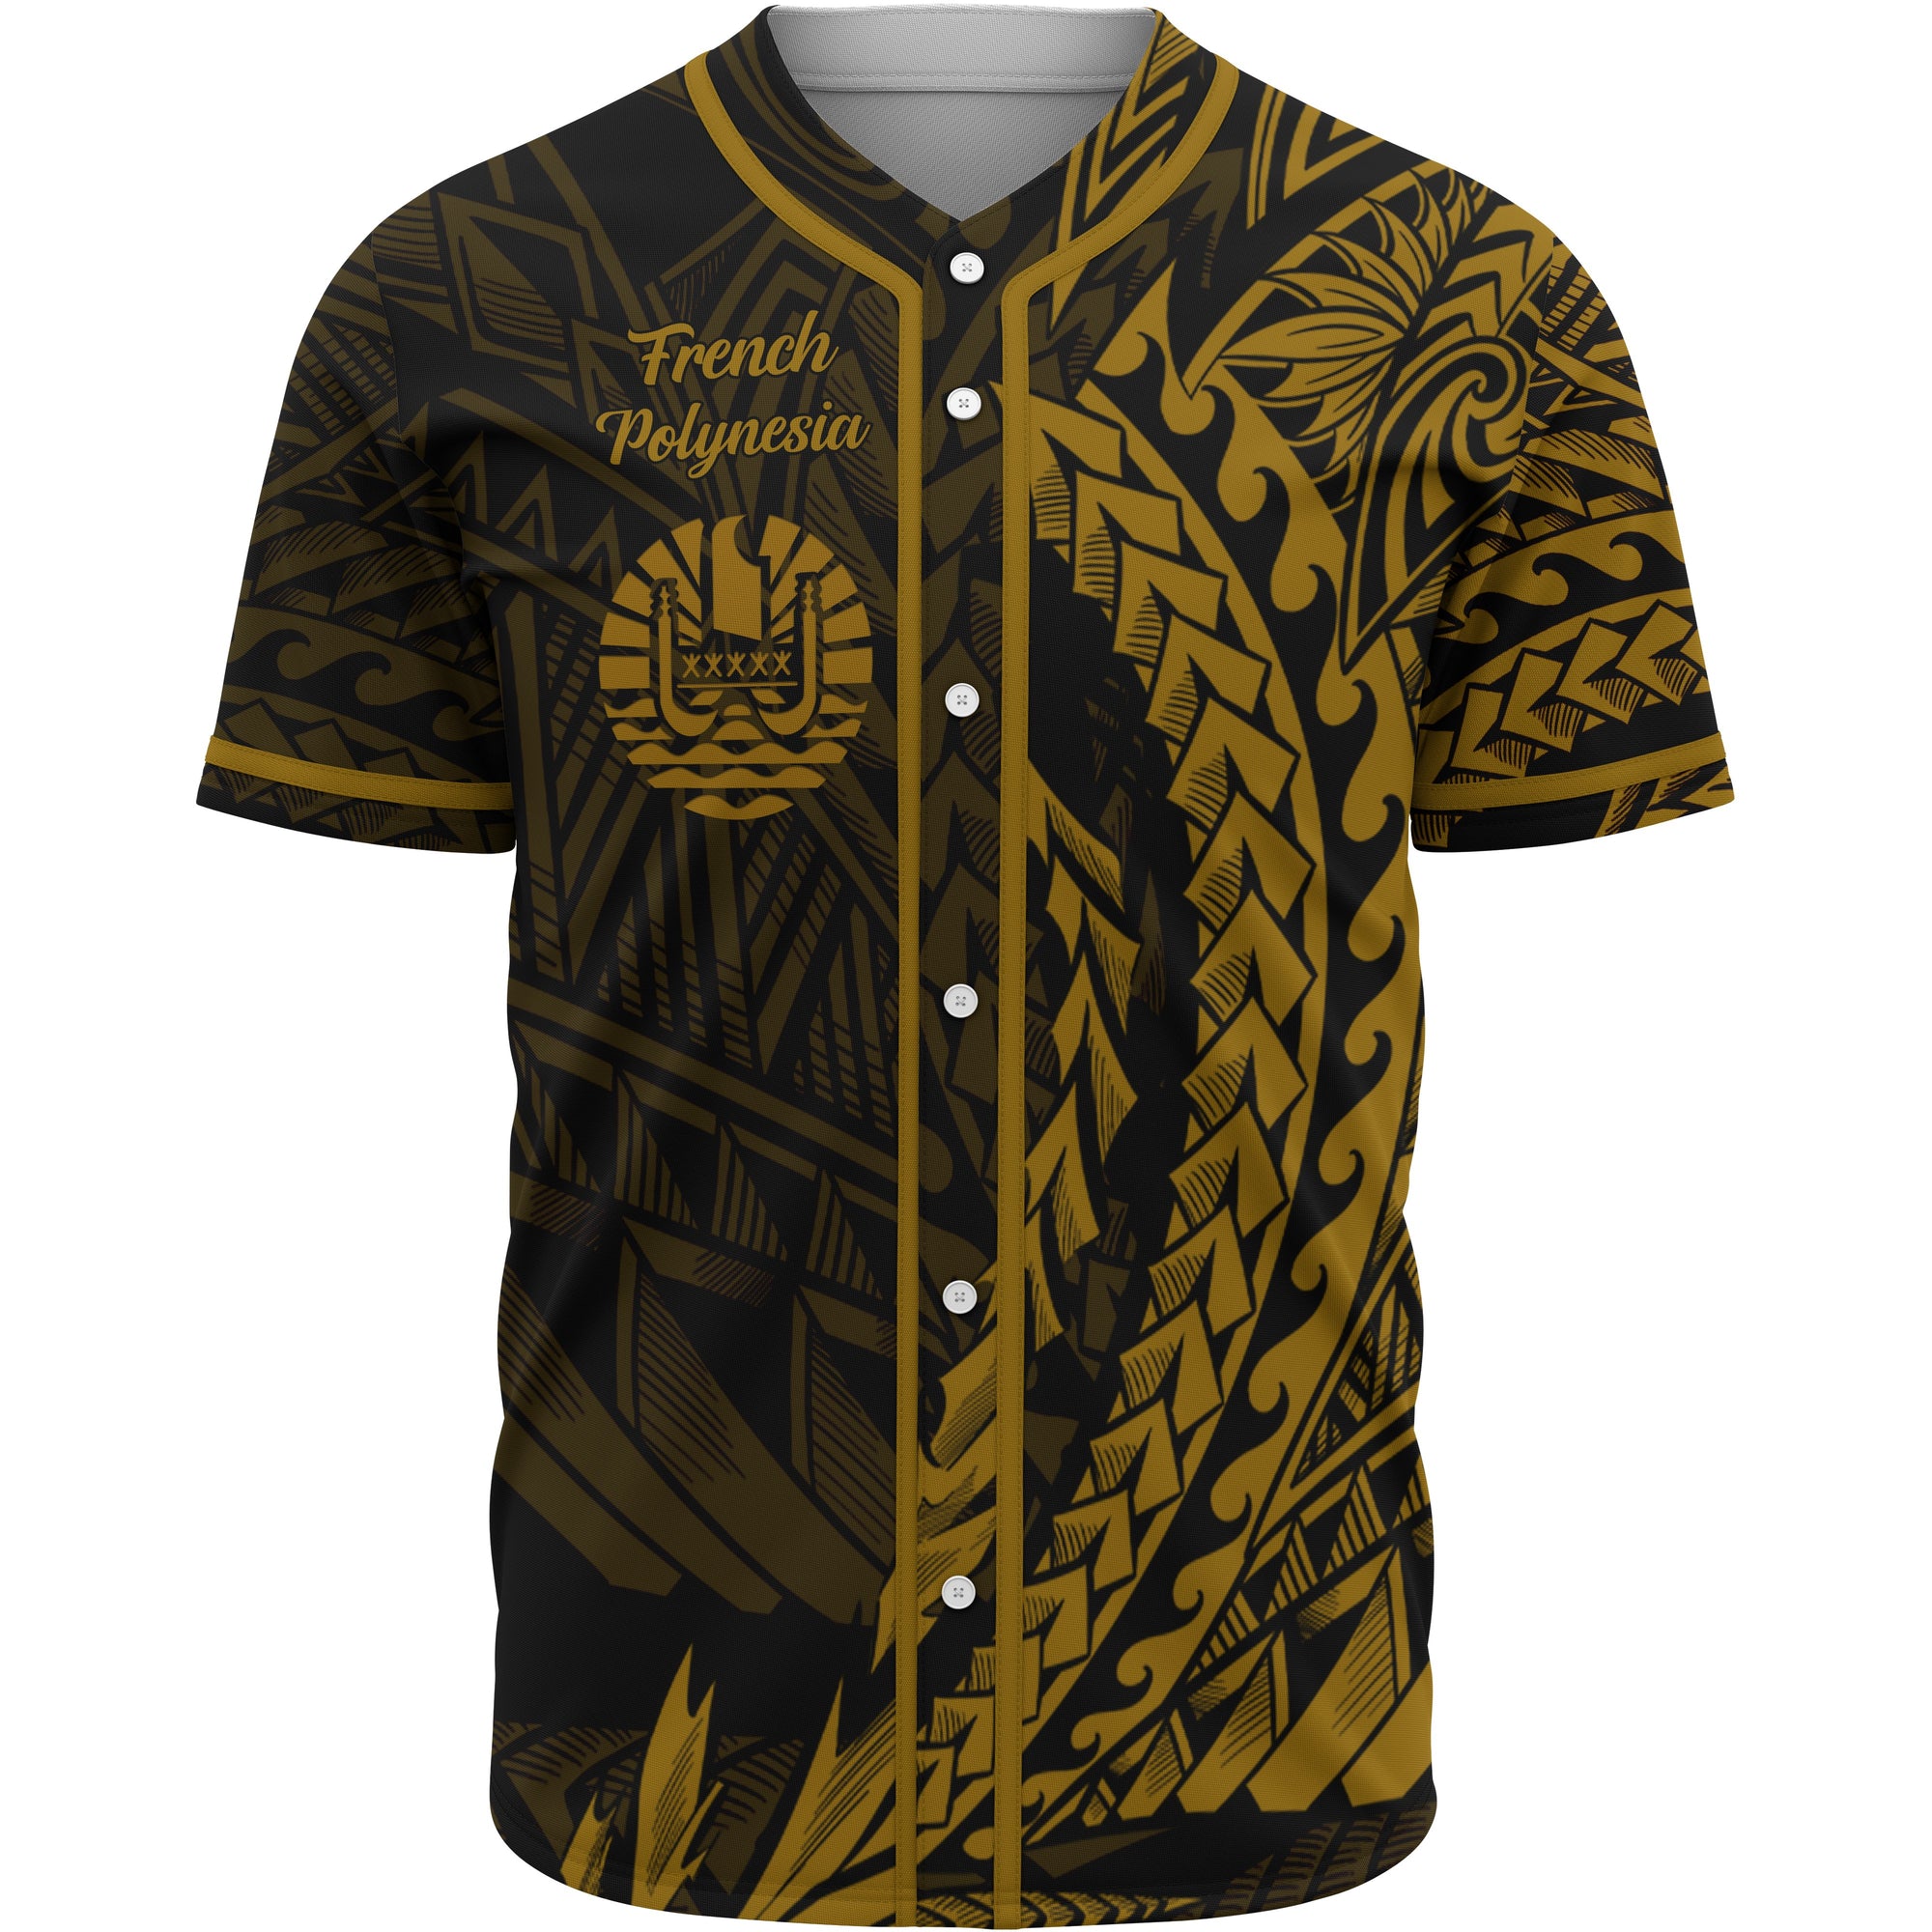 French Polynesia Baseball Shirt - Wings Style Unisex Gold - Polynesian Pride